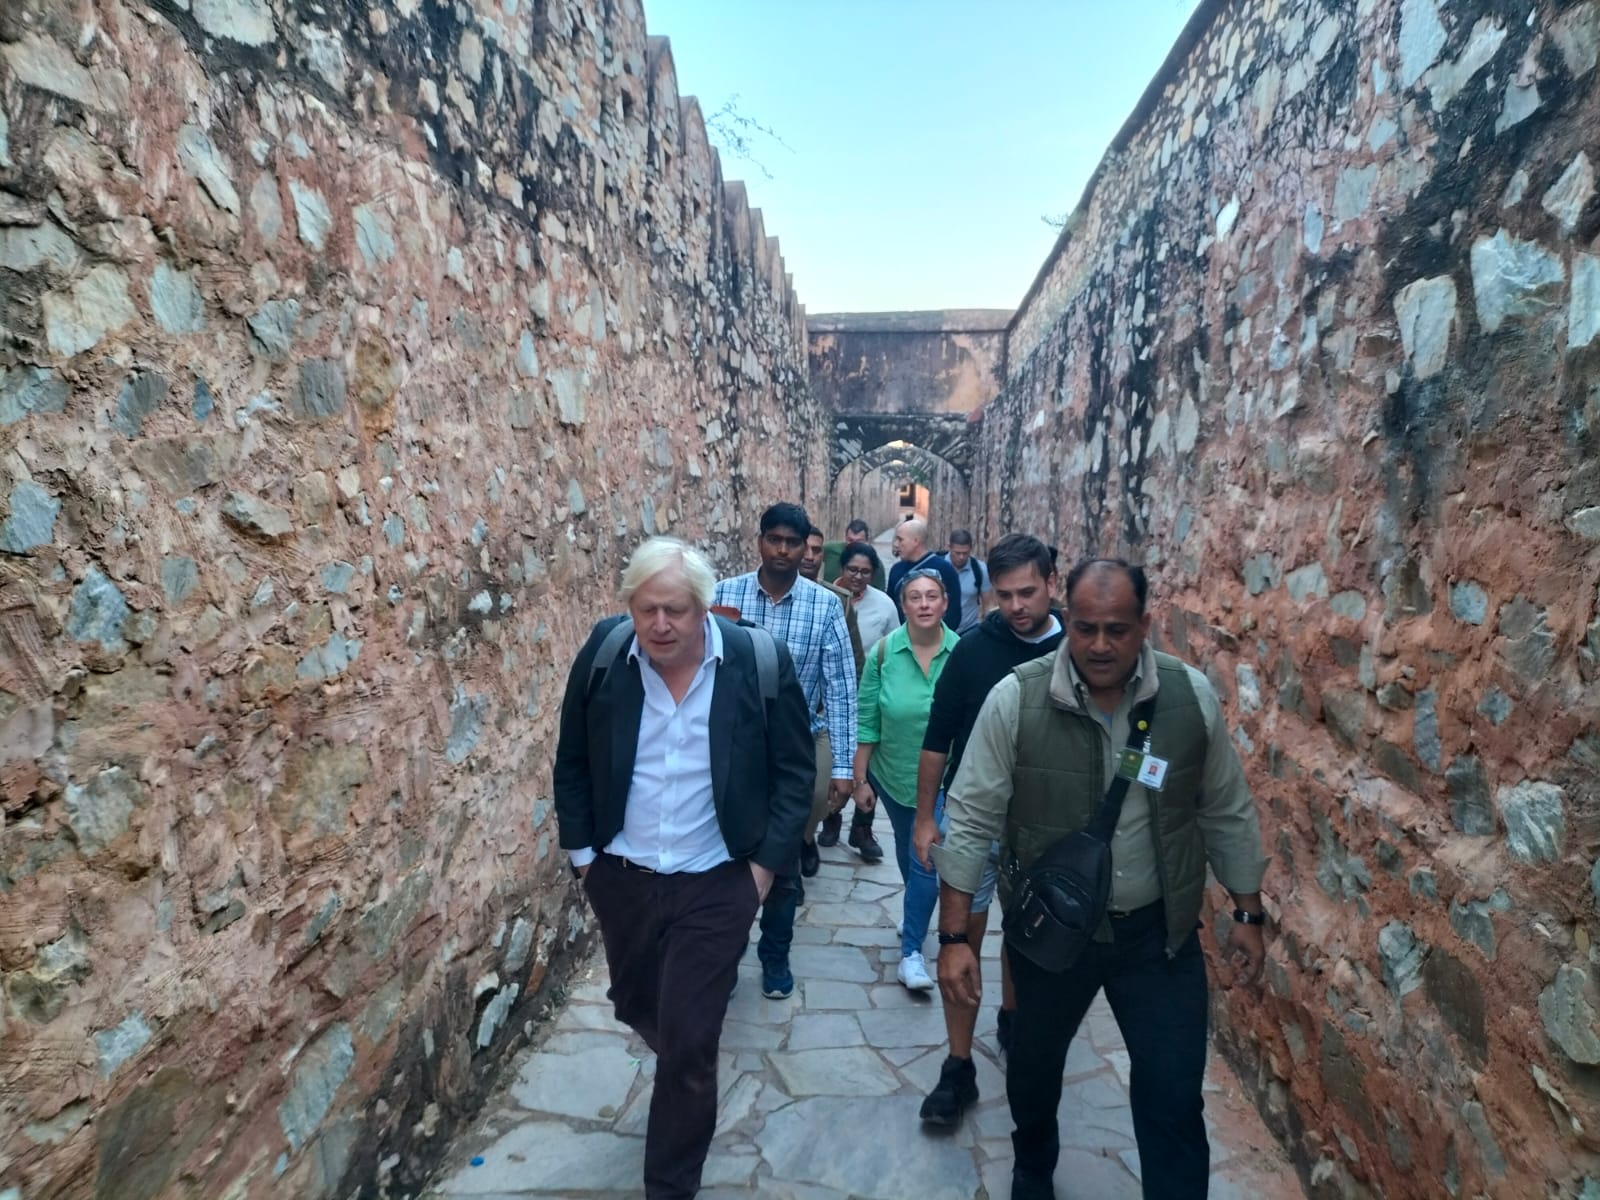 Boris Johnson visited Amer Mahal, Former British PM Boris Johnson in Jaipur